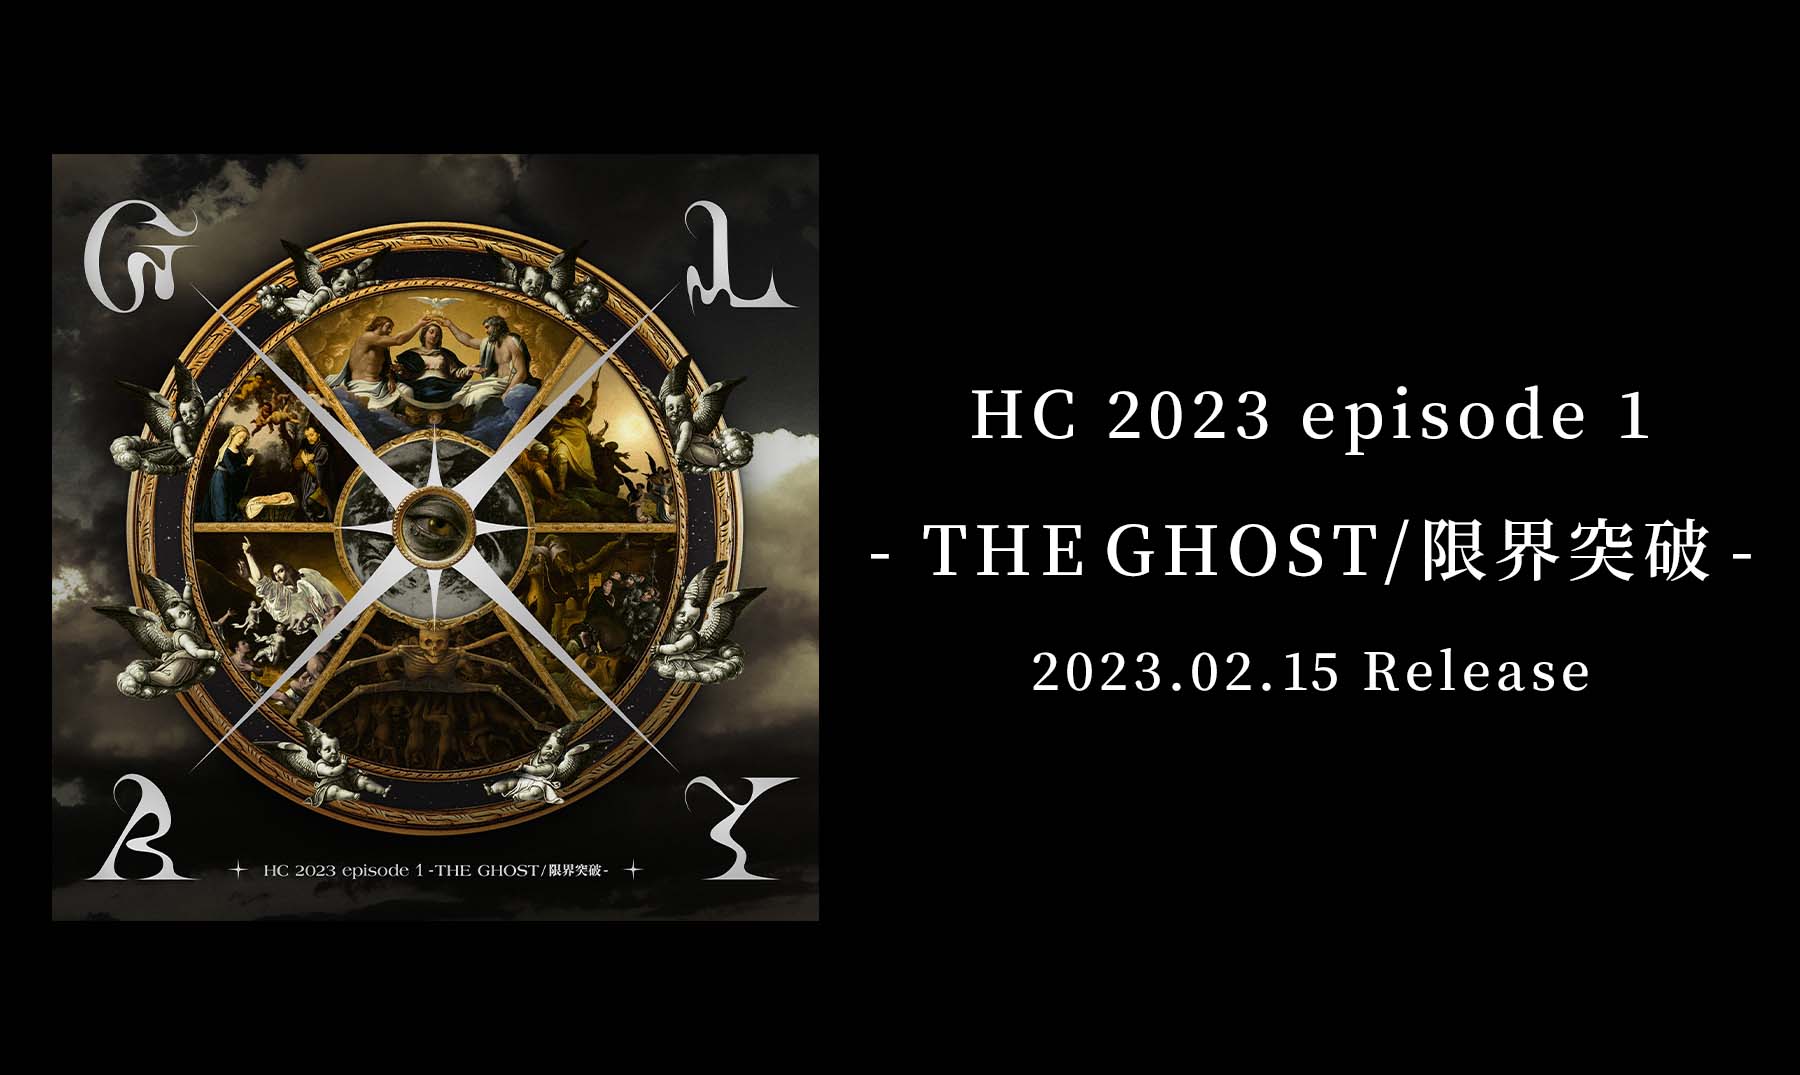 『HC 2023 episode 1 - THE GHOST/限界突破-』特設サイト